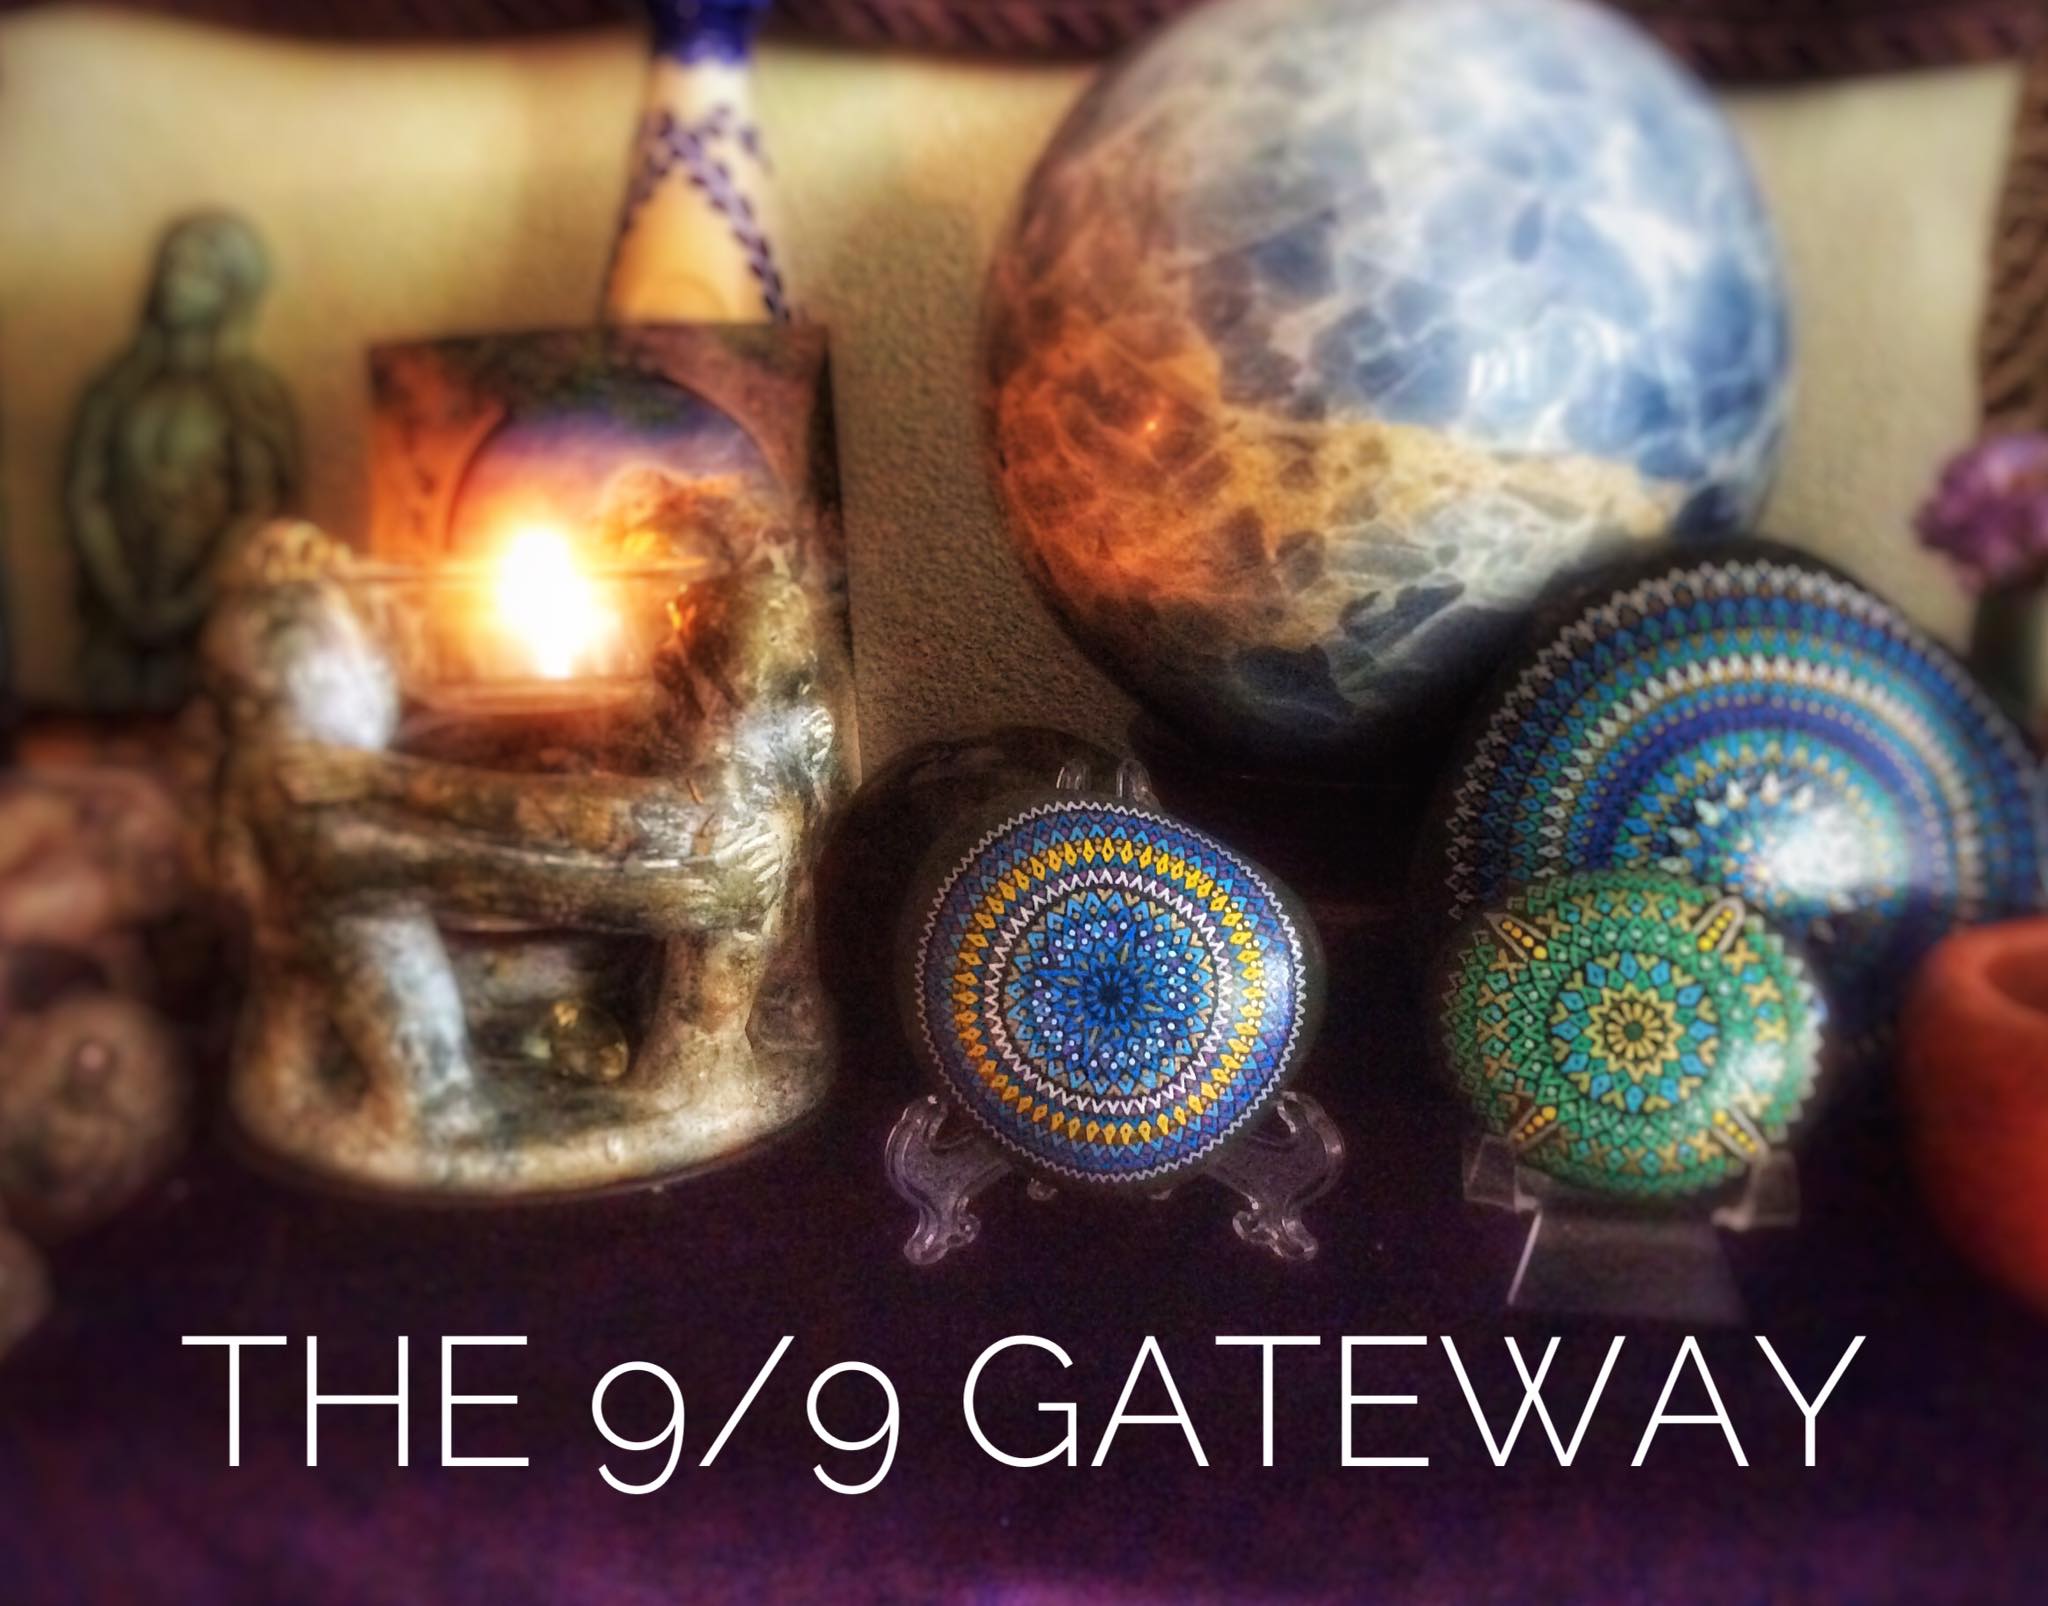 The Nine Nine Gateway